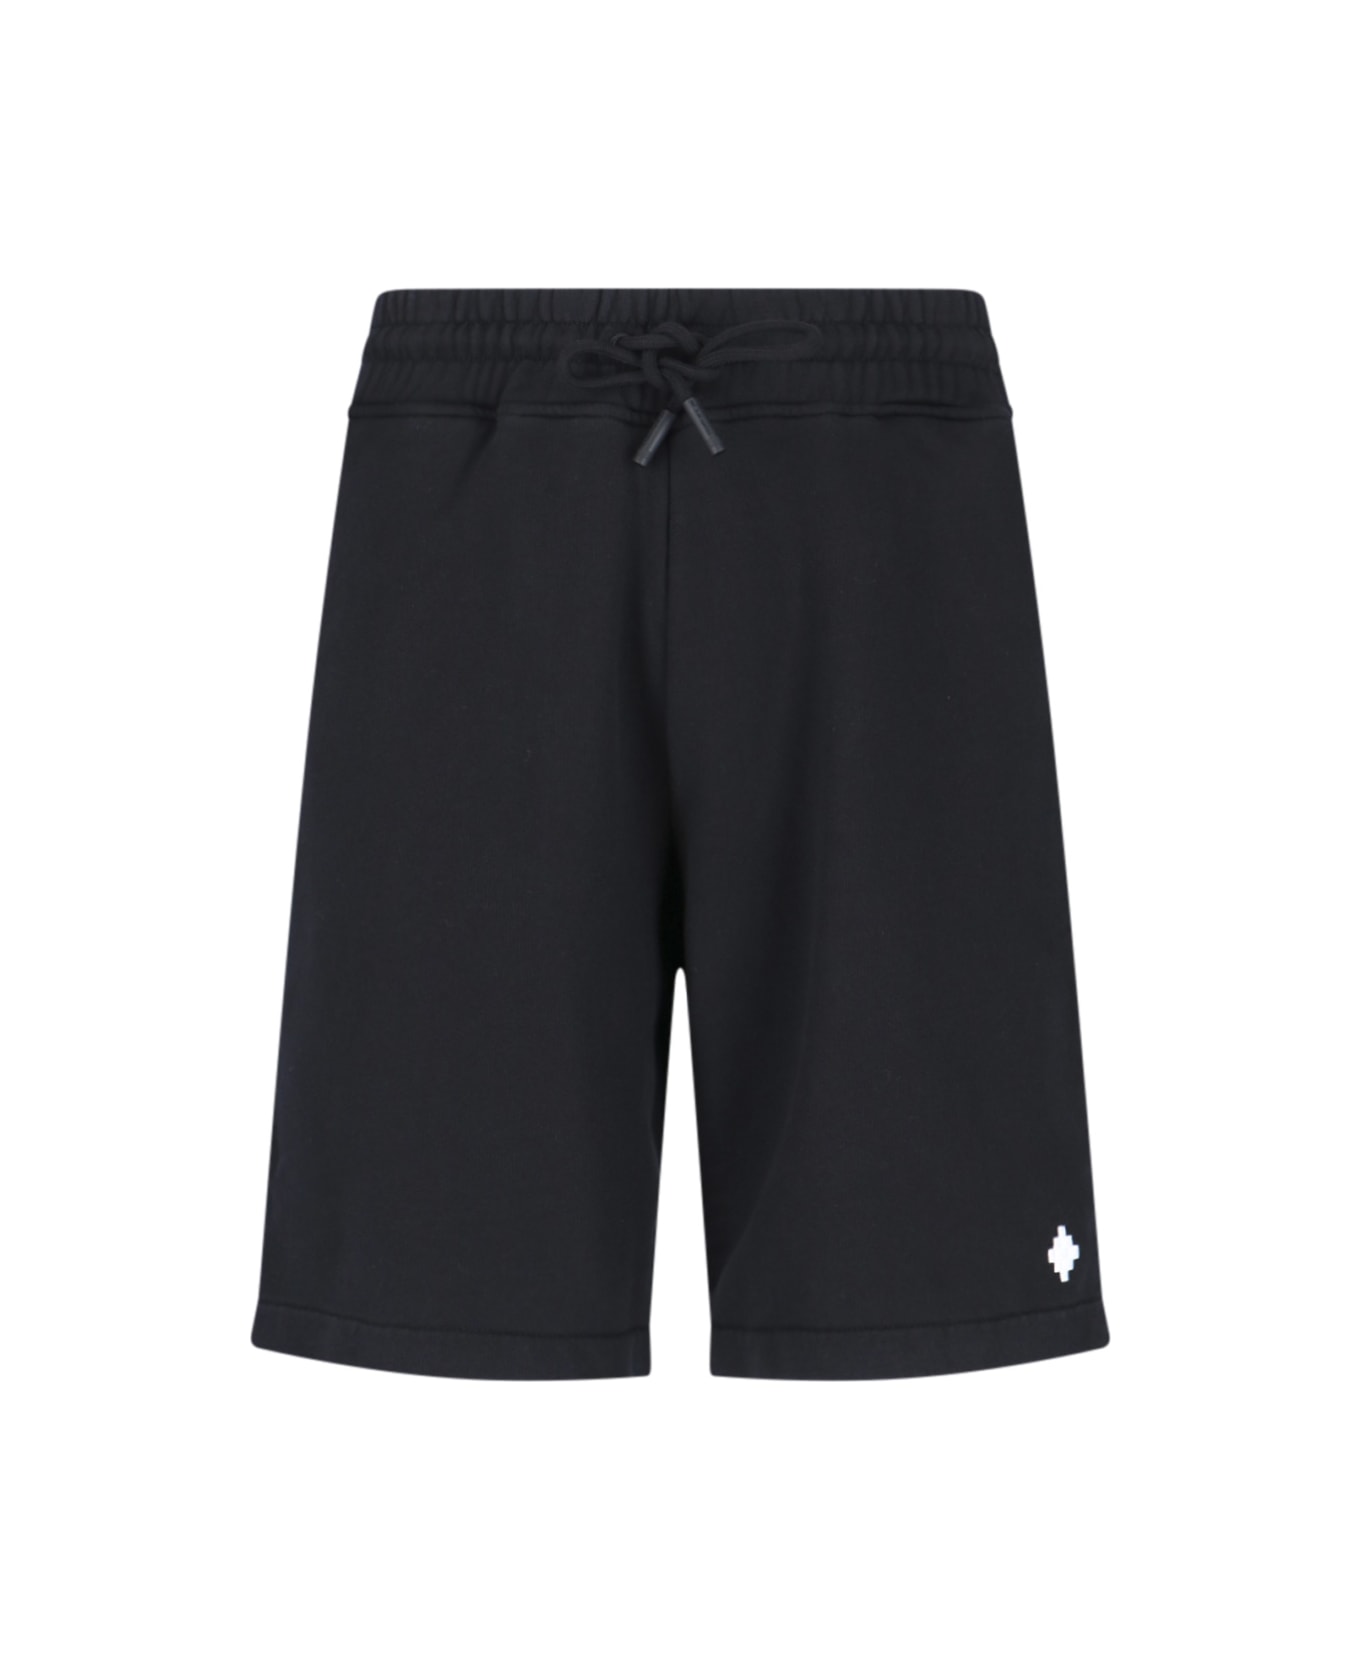 Marcelo Burlon 'cross' Sport Shorts - Black